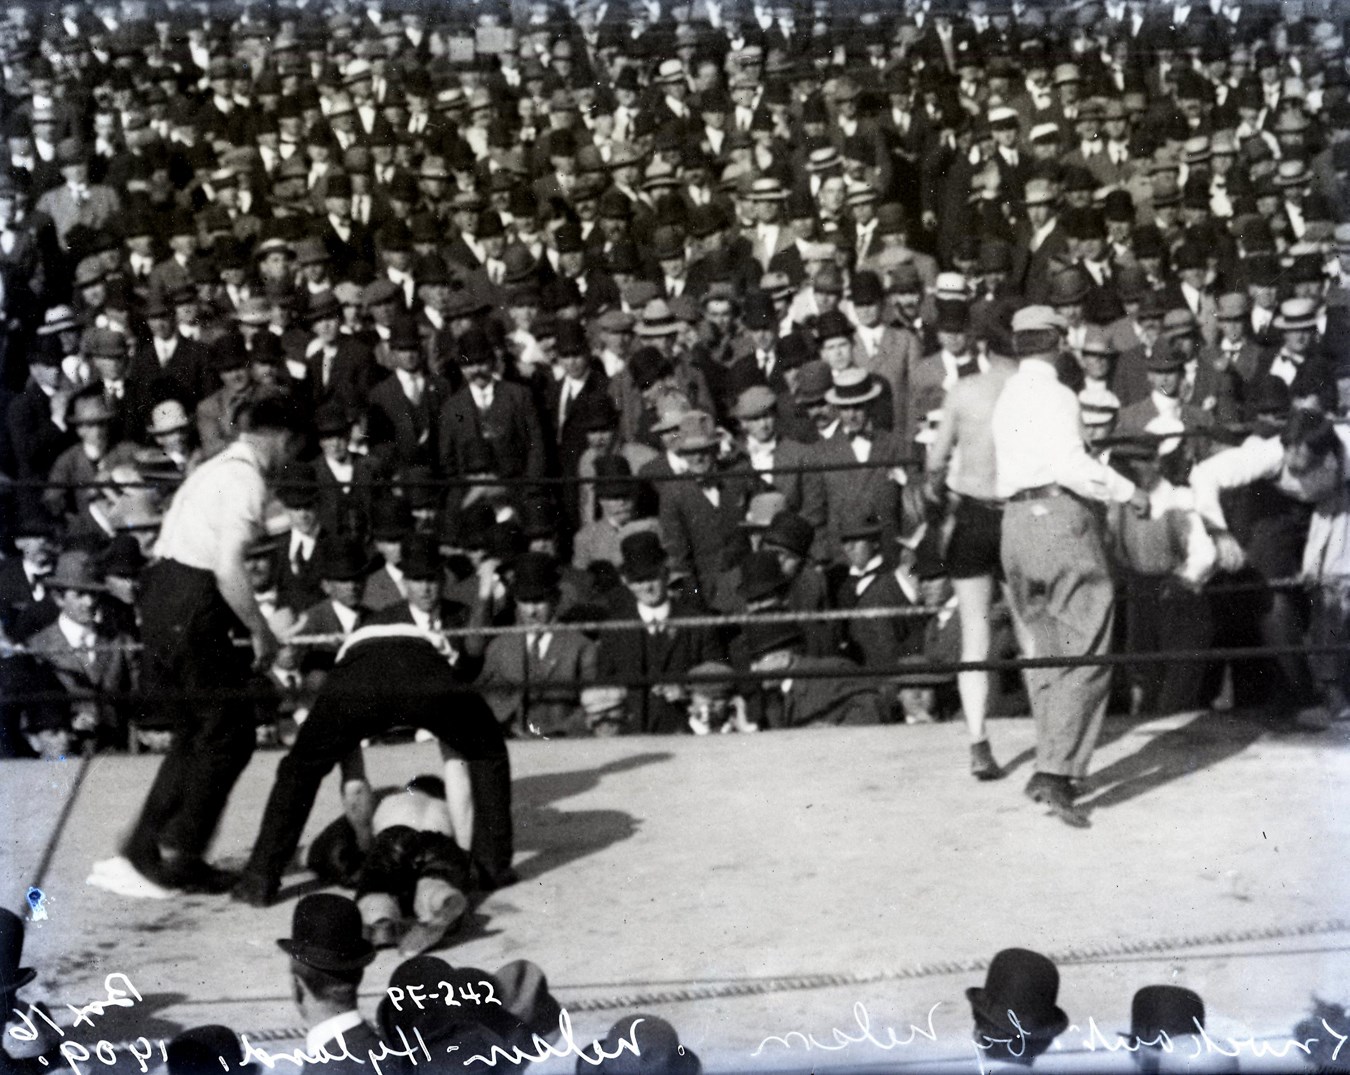 1909 Battling Nelson vs. Dick Hyland "Out Like a Light" Type I Glass Plate Negative by Dana Studio